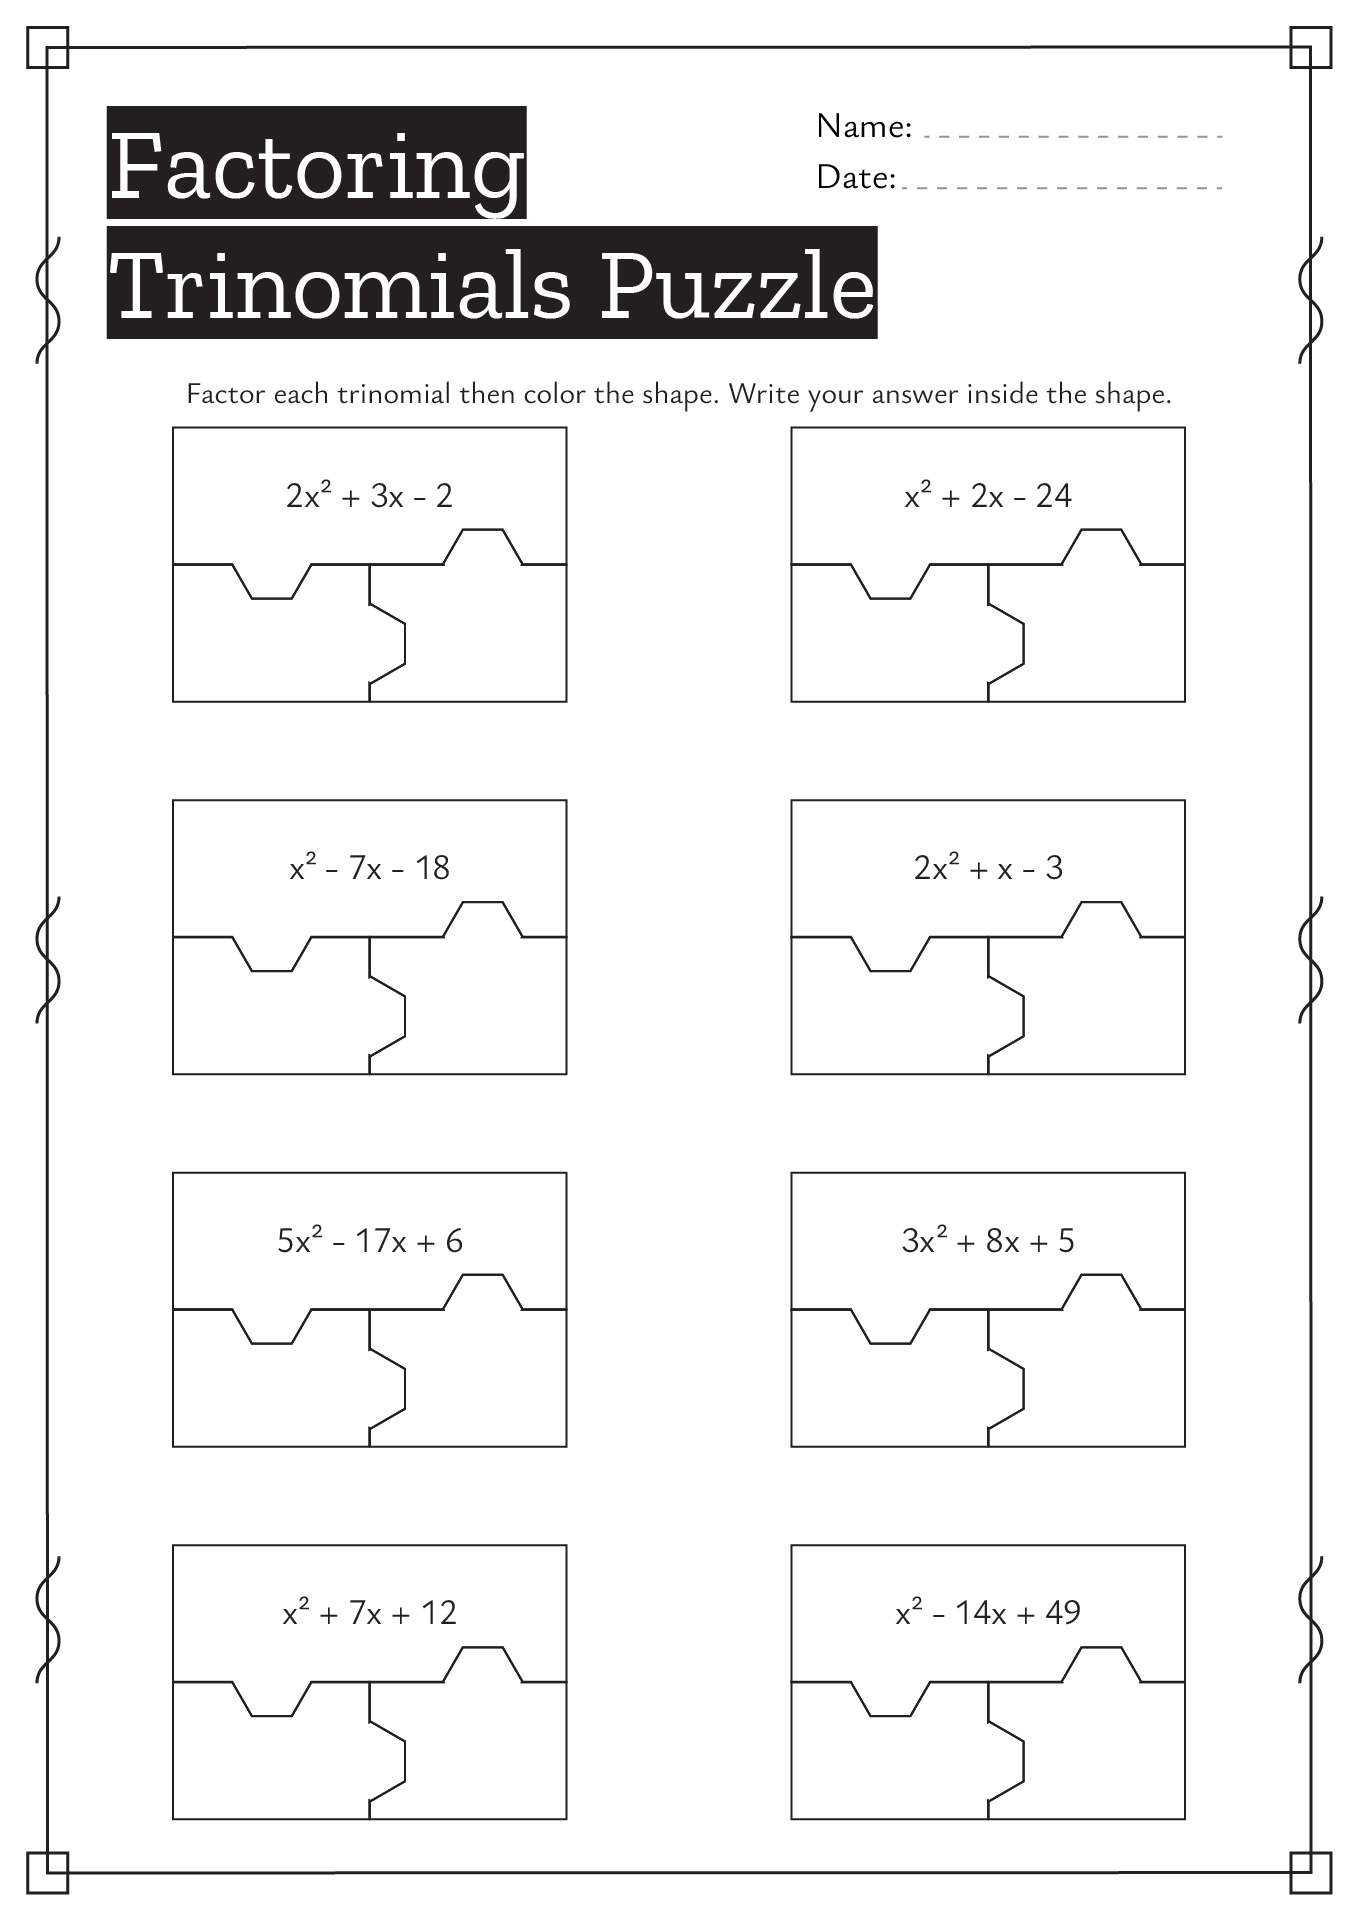 Factoring Trinomials Puzzle Worksheet